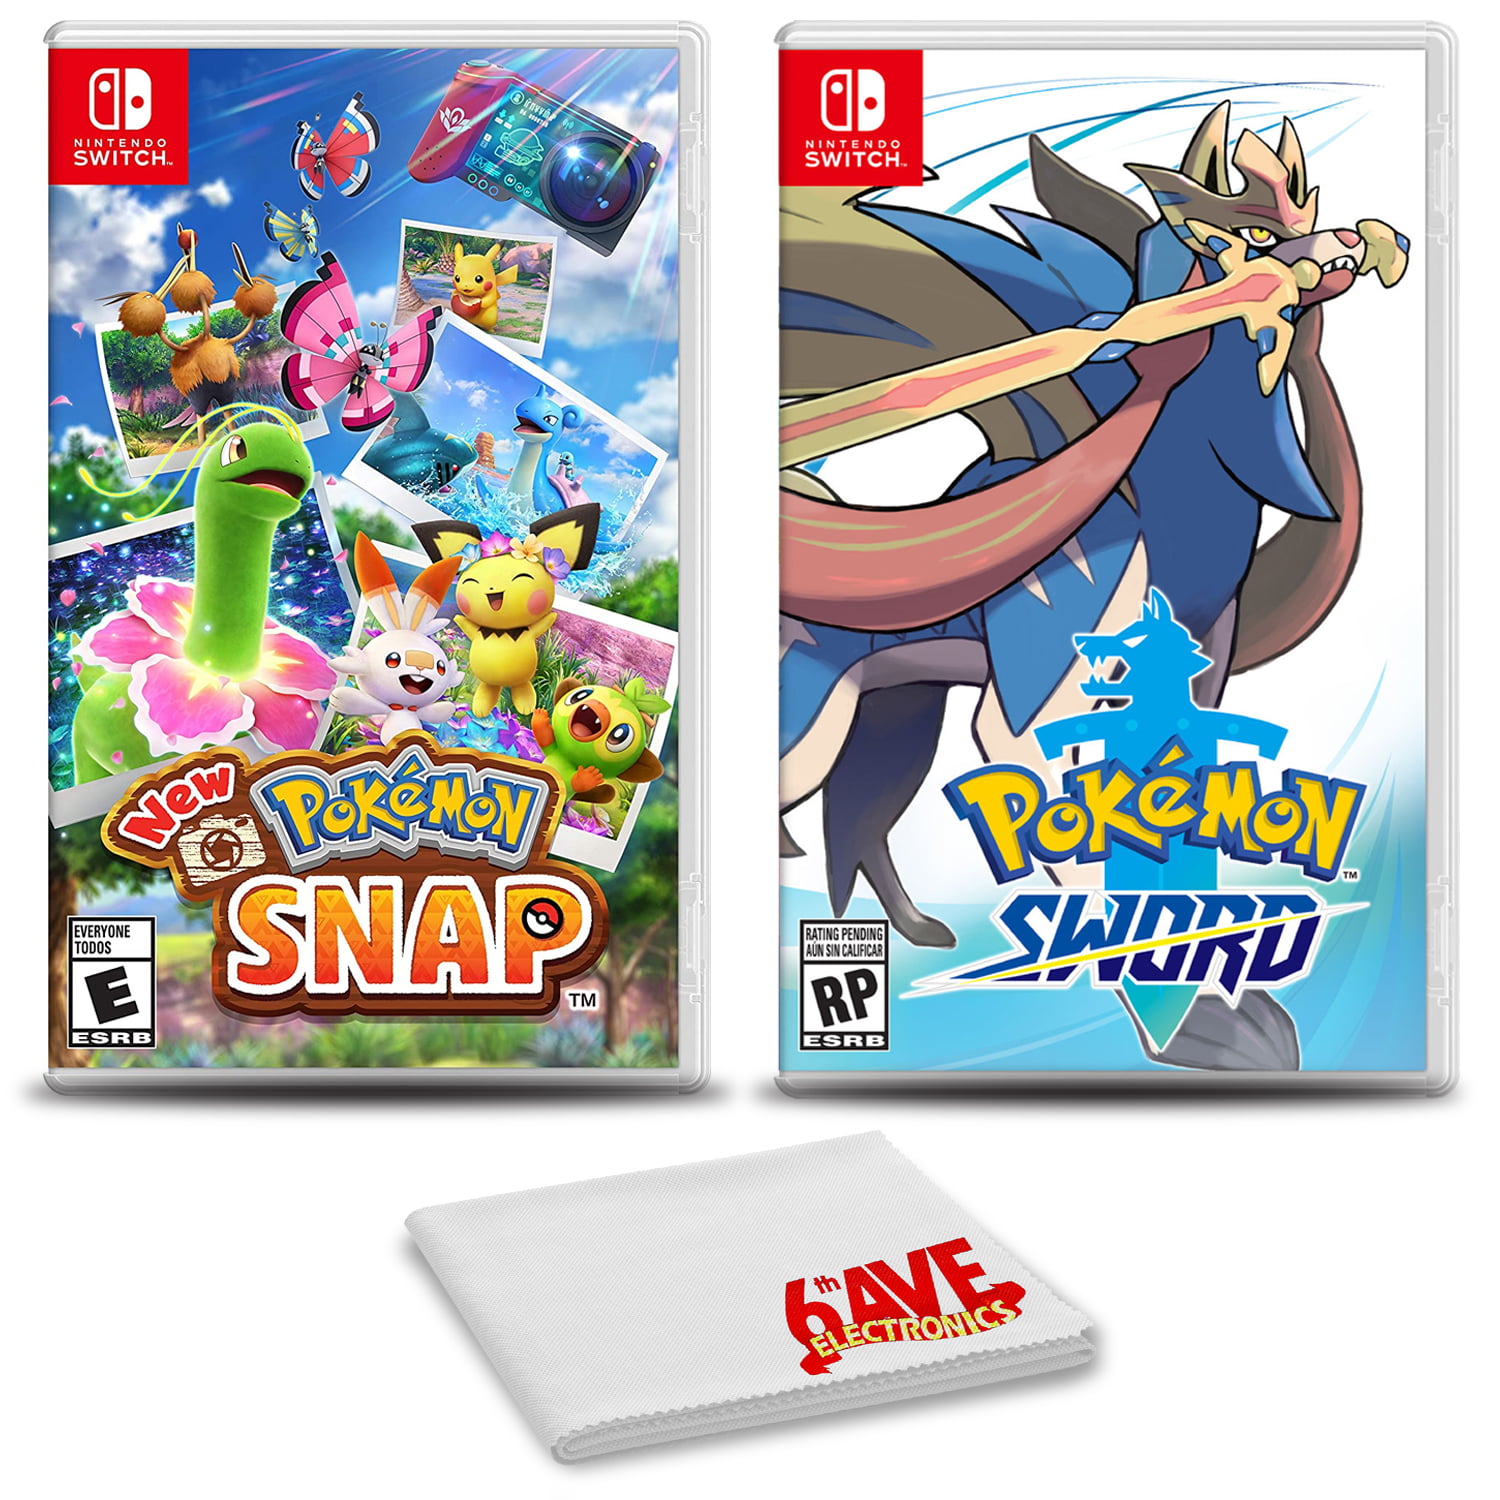 Pokemon Snap And Pokemon Sword Two Game Bundle For Nintendo Switch Walmart Com